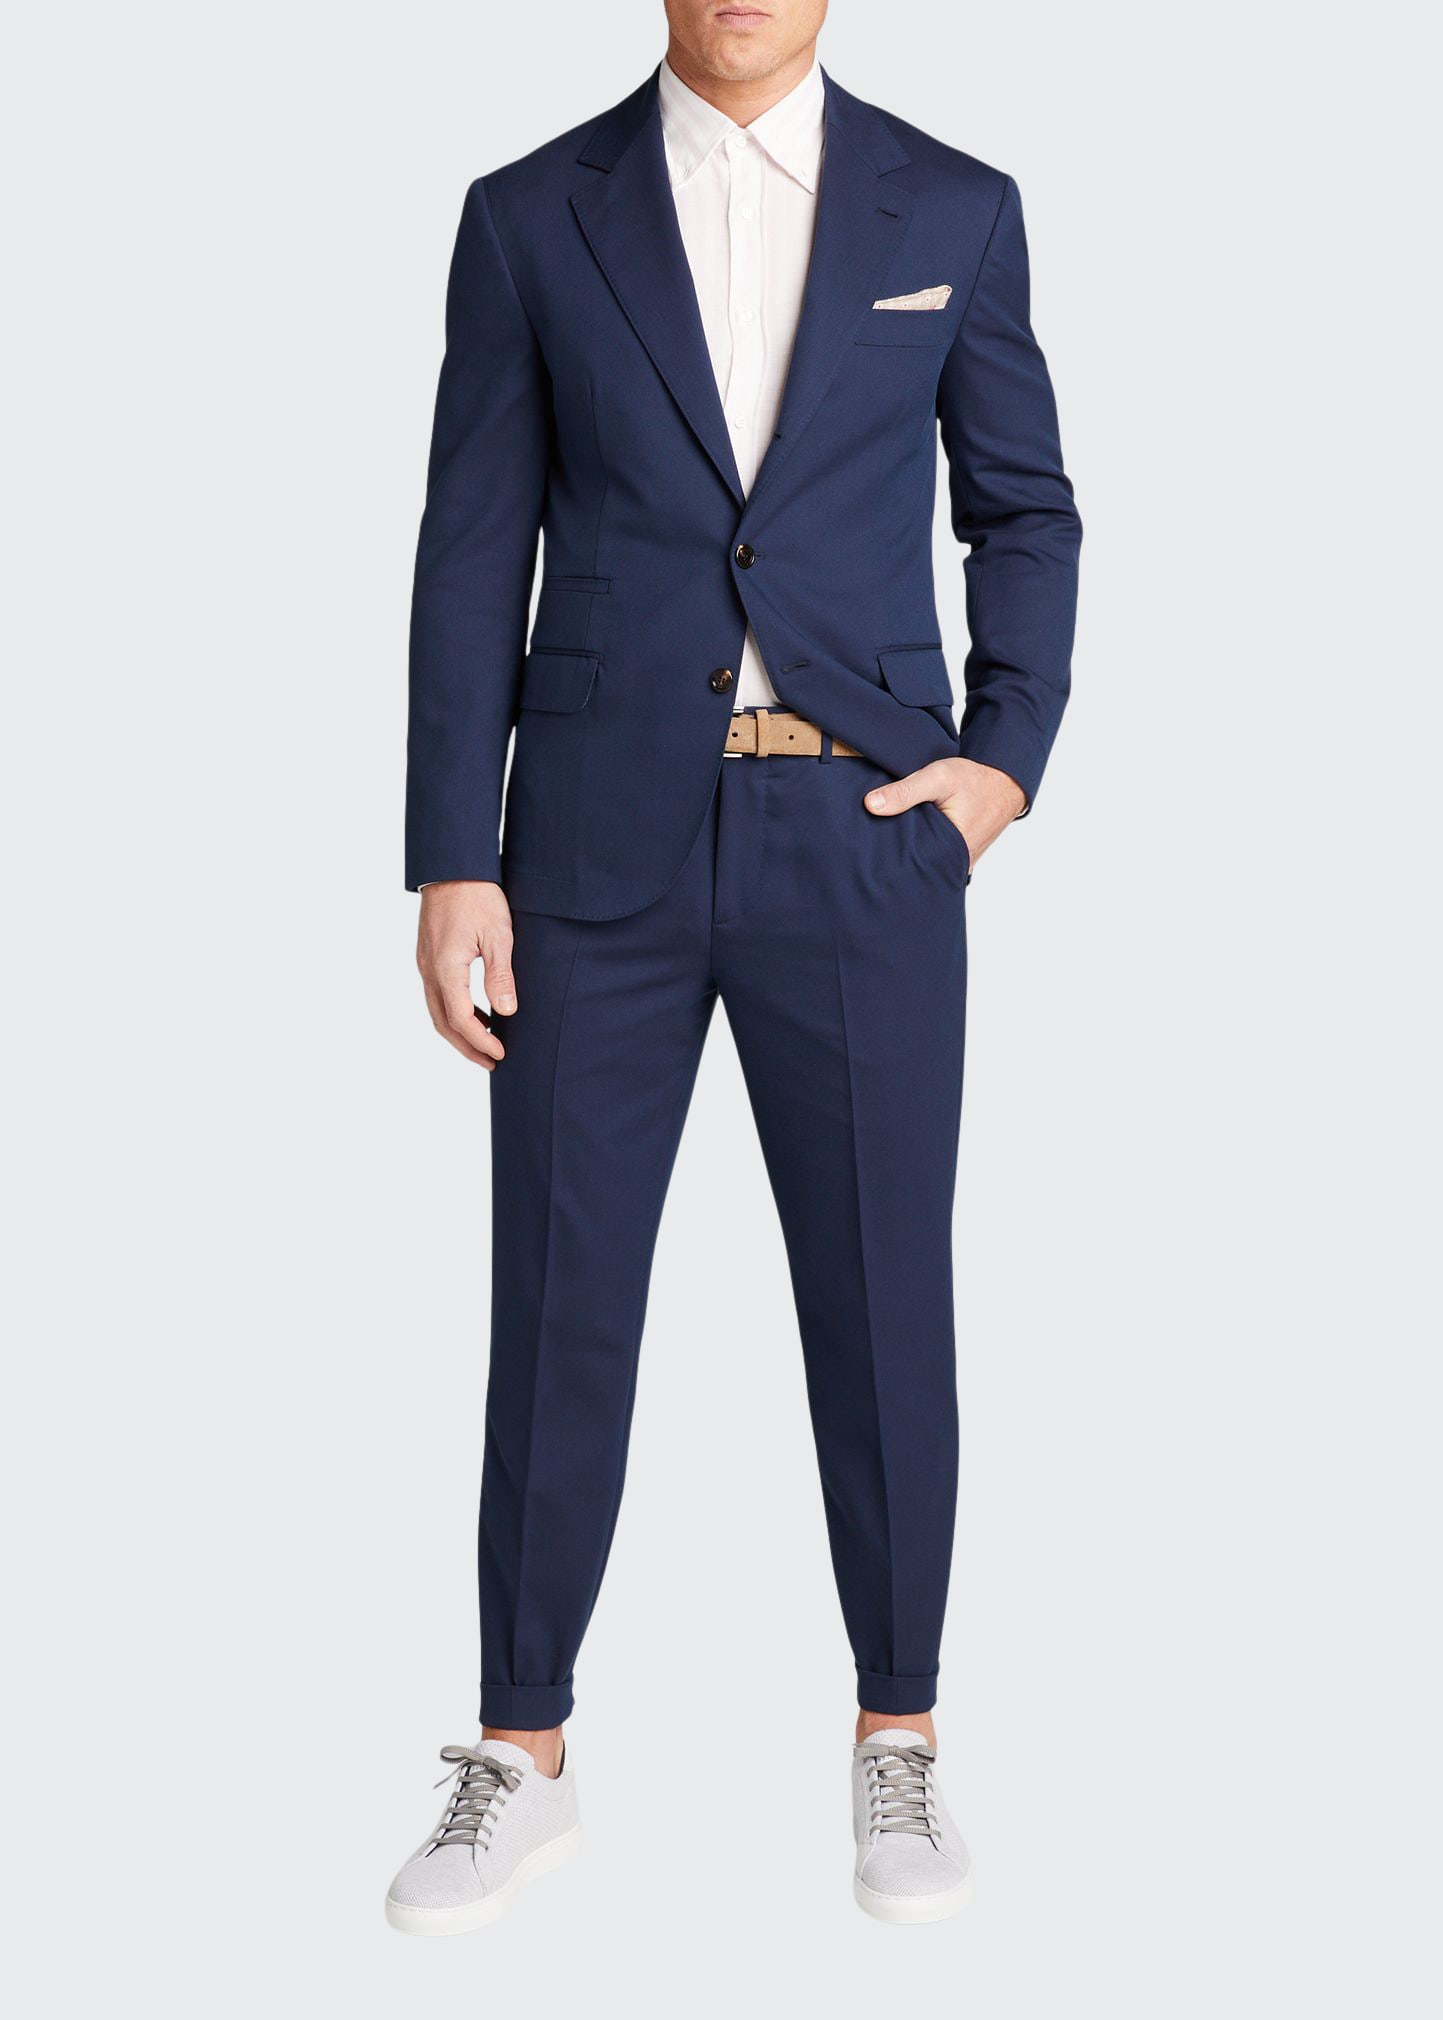 Brunello Cucinelli Men's Solid Wool Two-Piece Suit | Neiman Marcus